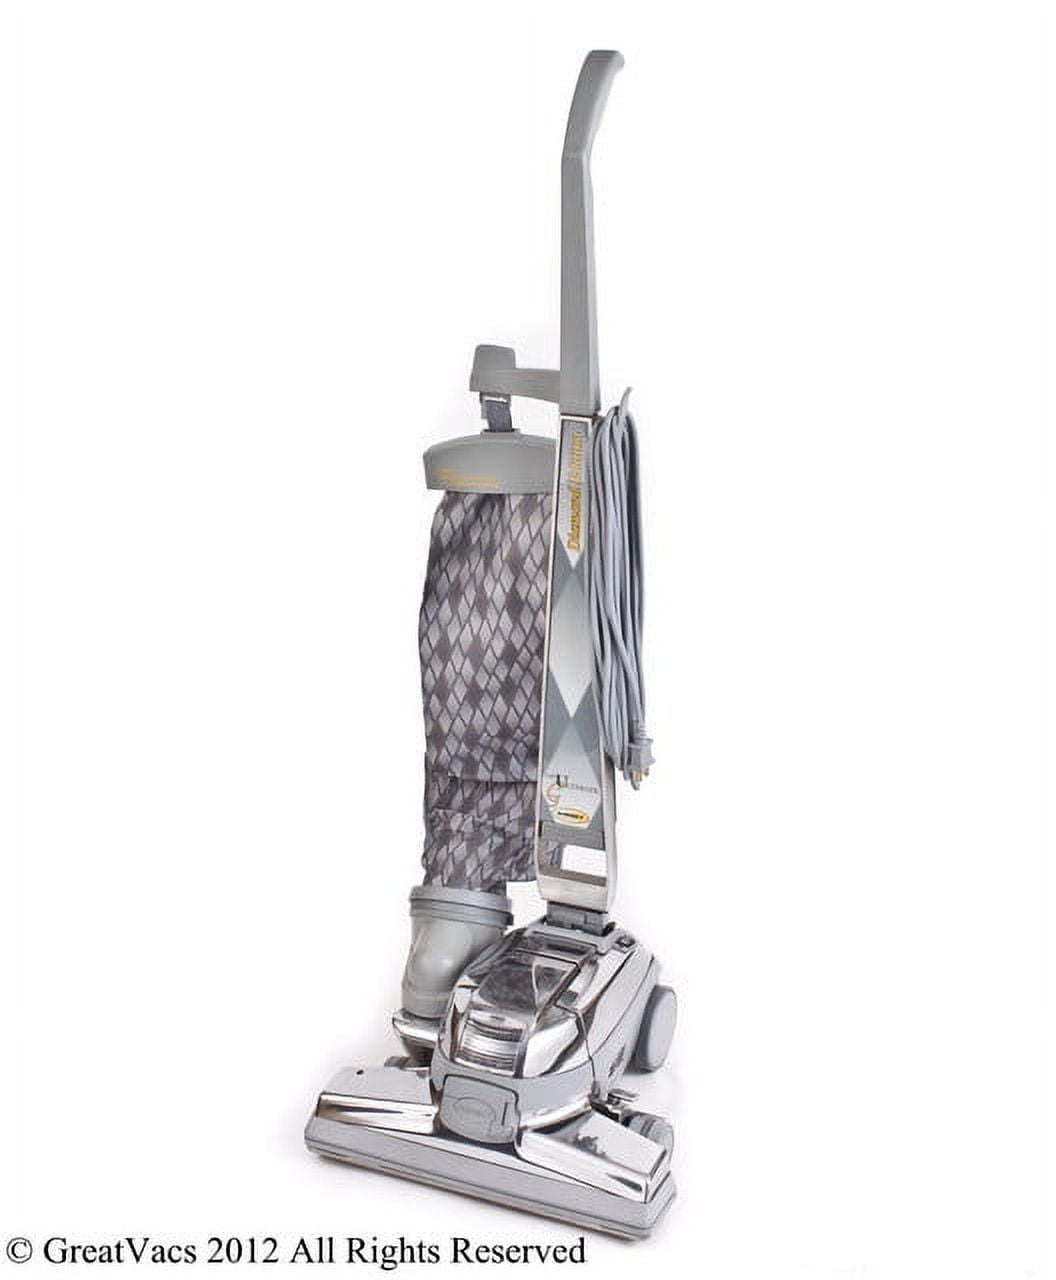 Brand NEW KIRBY vacuum!!!! LATEST MODEL!!! $1400 - Upright Vacuum Cleaners  - Lupus, Missouri, Facebook Marketplace